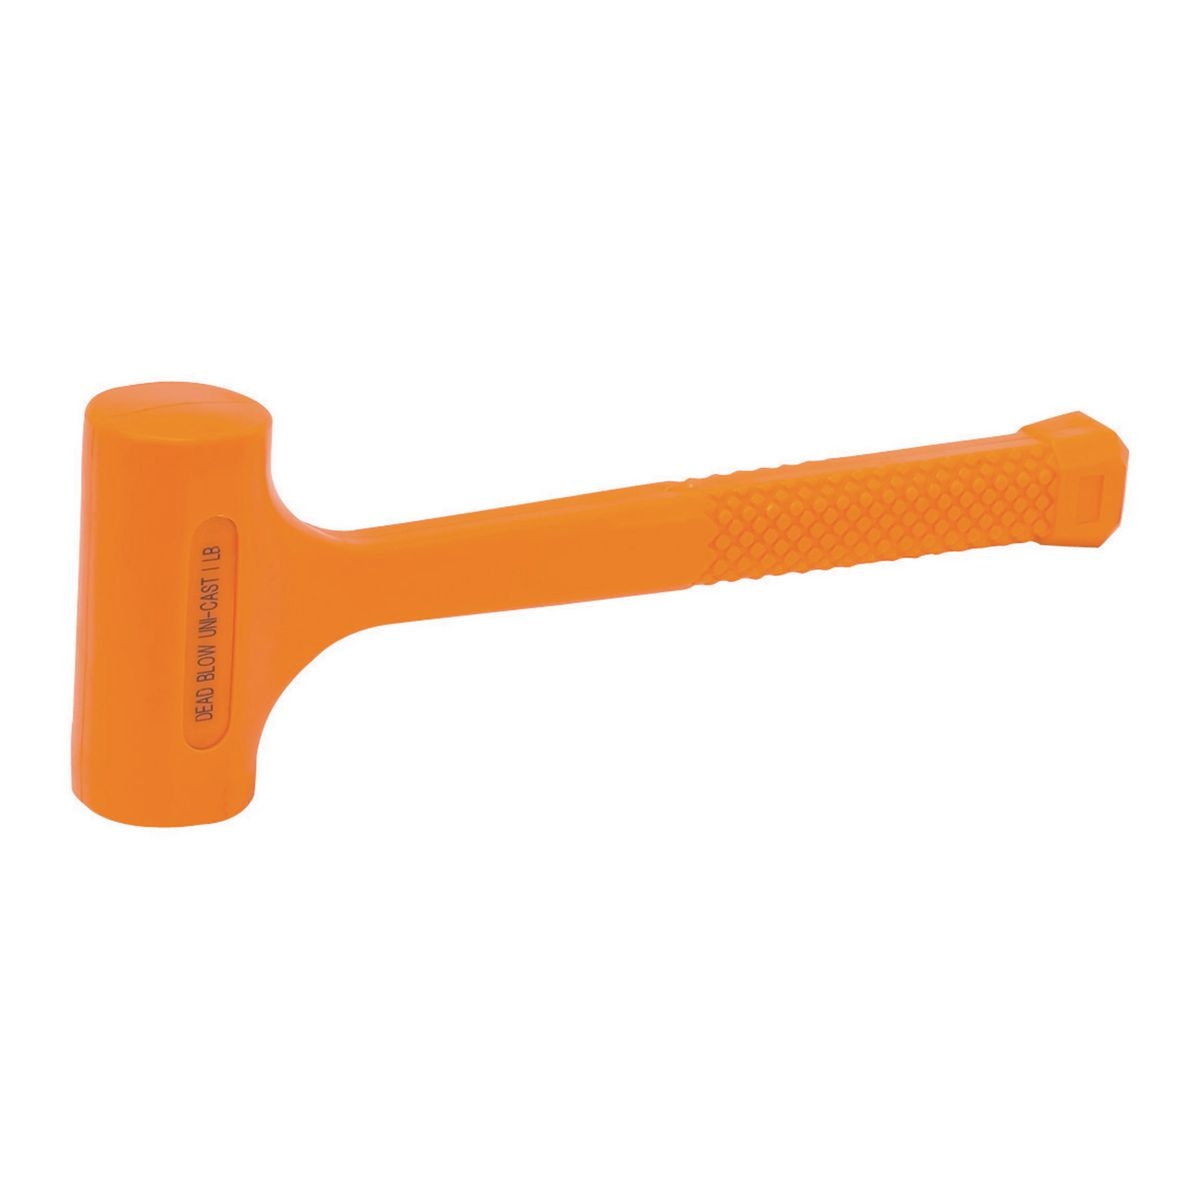 PITTSBURGH 1 lb. Neon Orange Dead Blow Hammer - Item 41796 / 68980